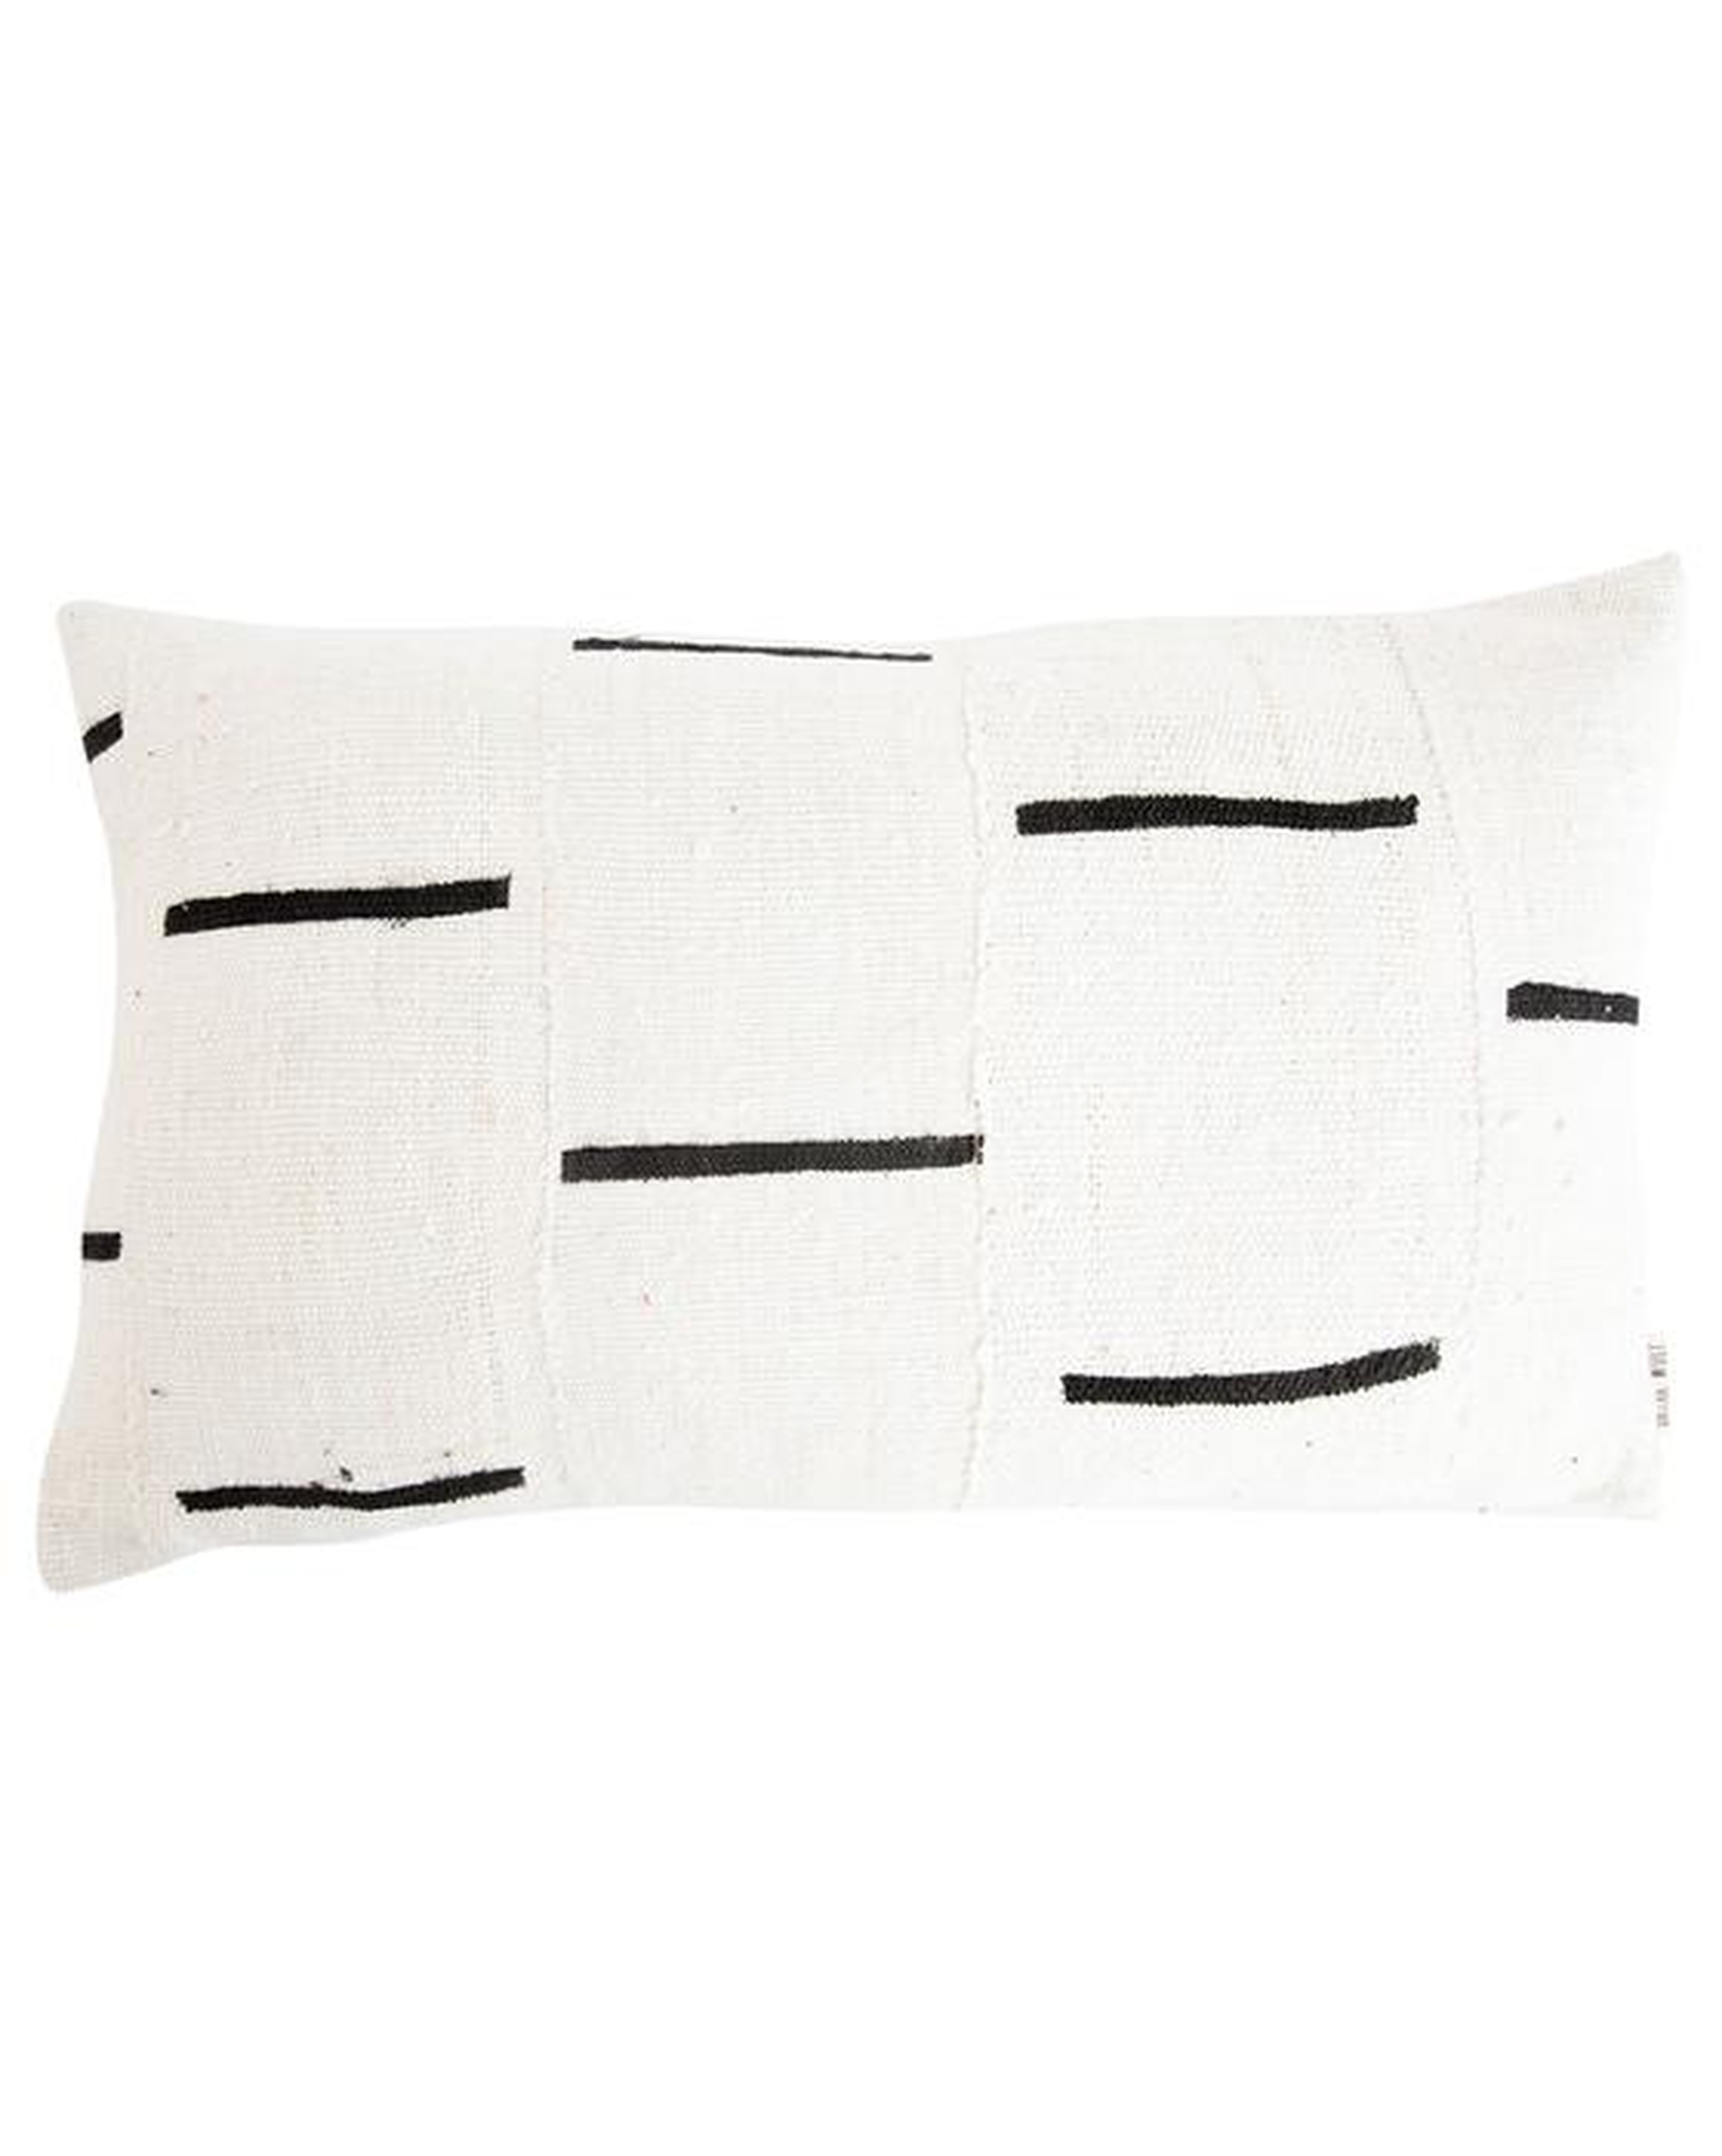 Indu Pillow, Black & White, 20" x 12" - McGee & Co.